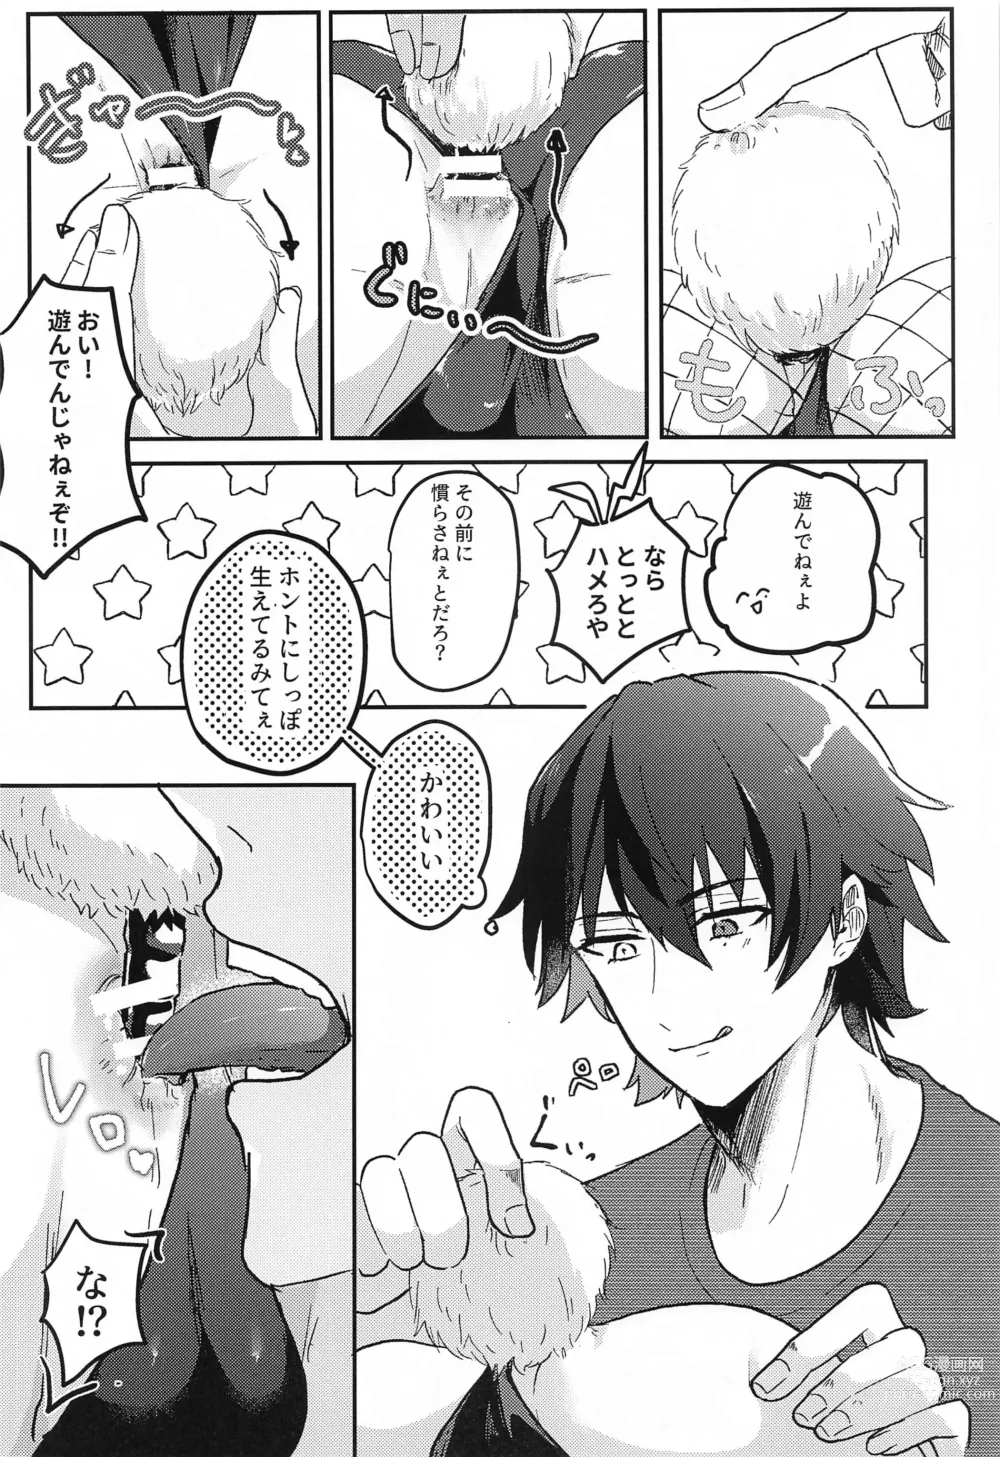 Page 9 of doujinshi Bunny